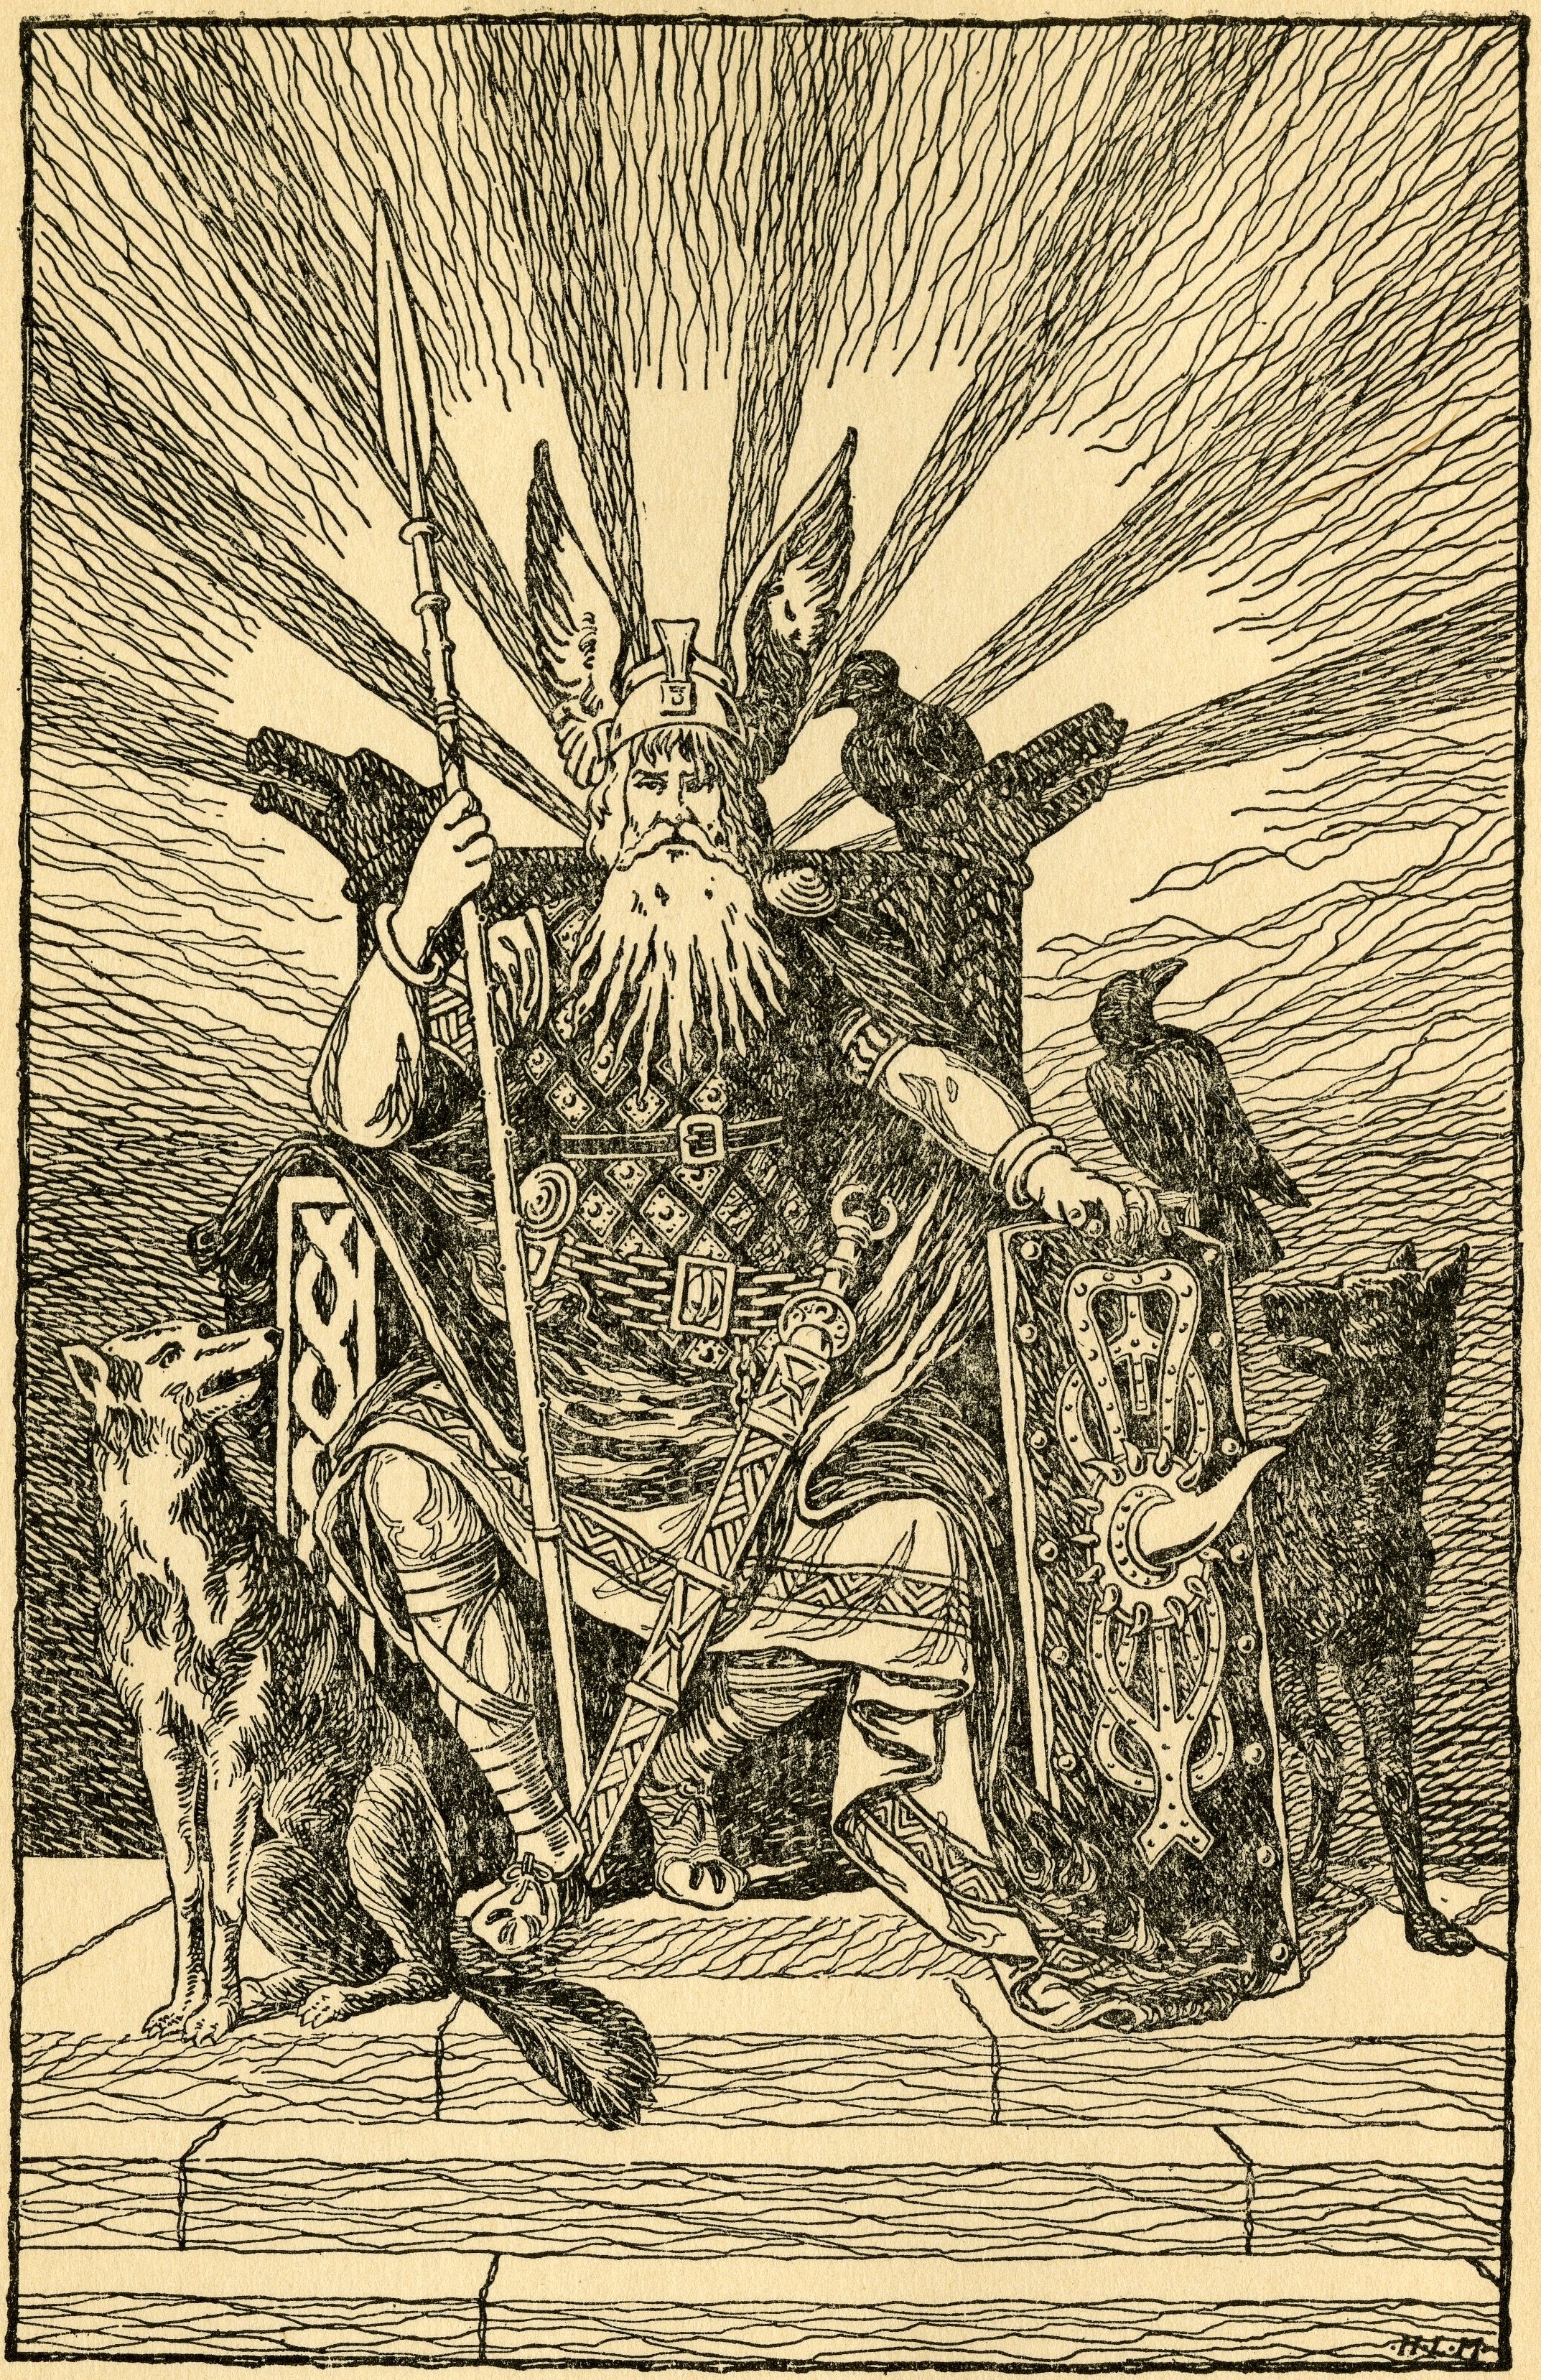 "Odin, the Allfather"